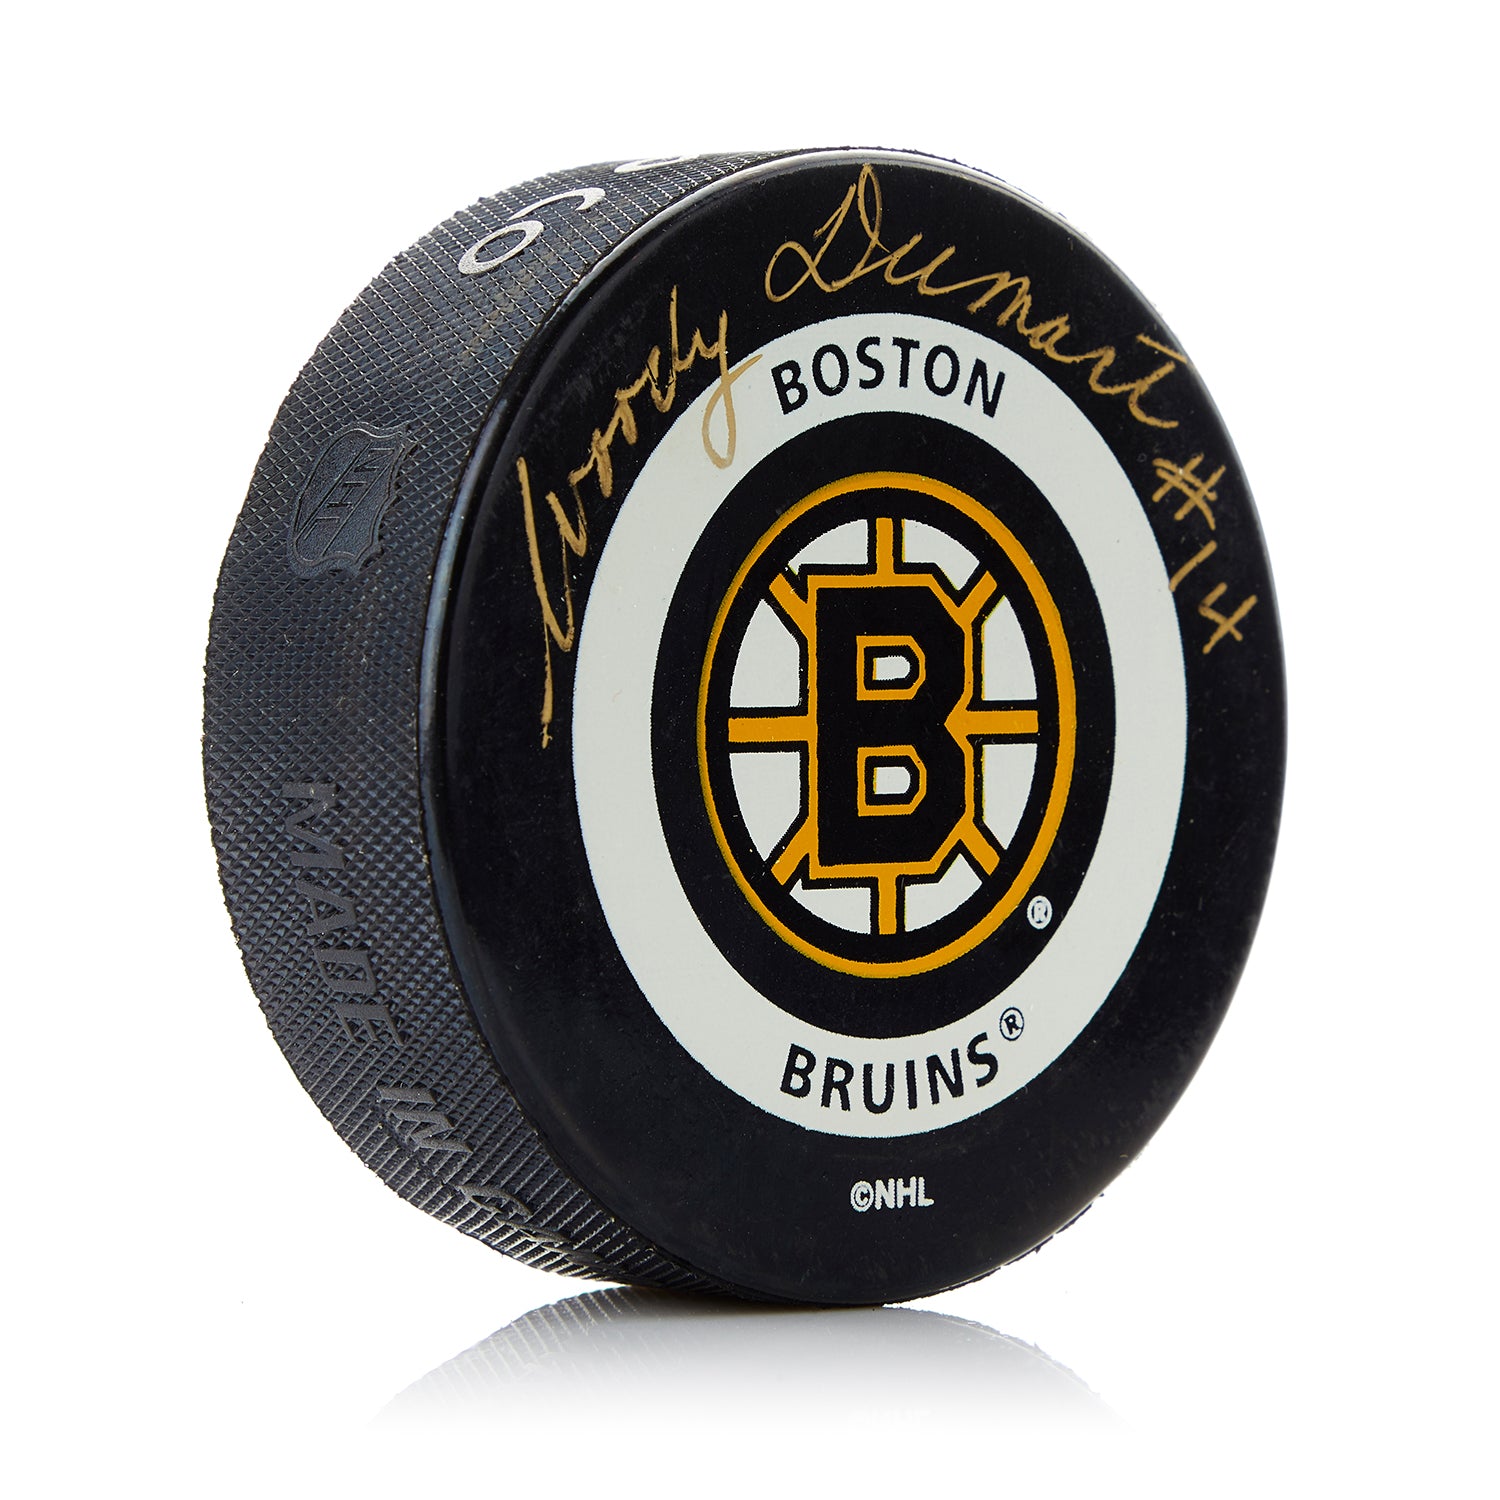 Woody Dumart Boston Bruins Autographed Hockey Puck